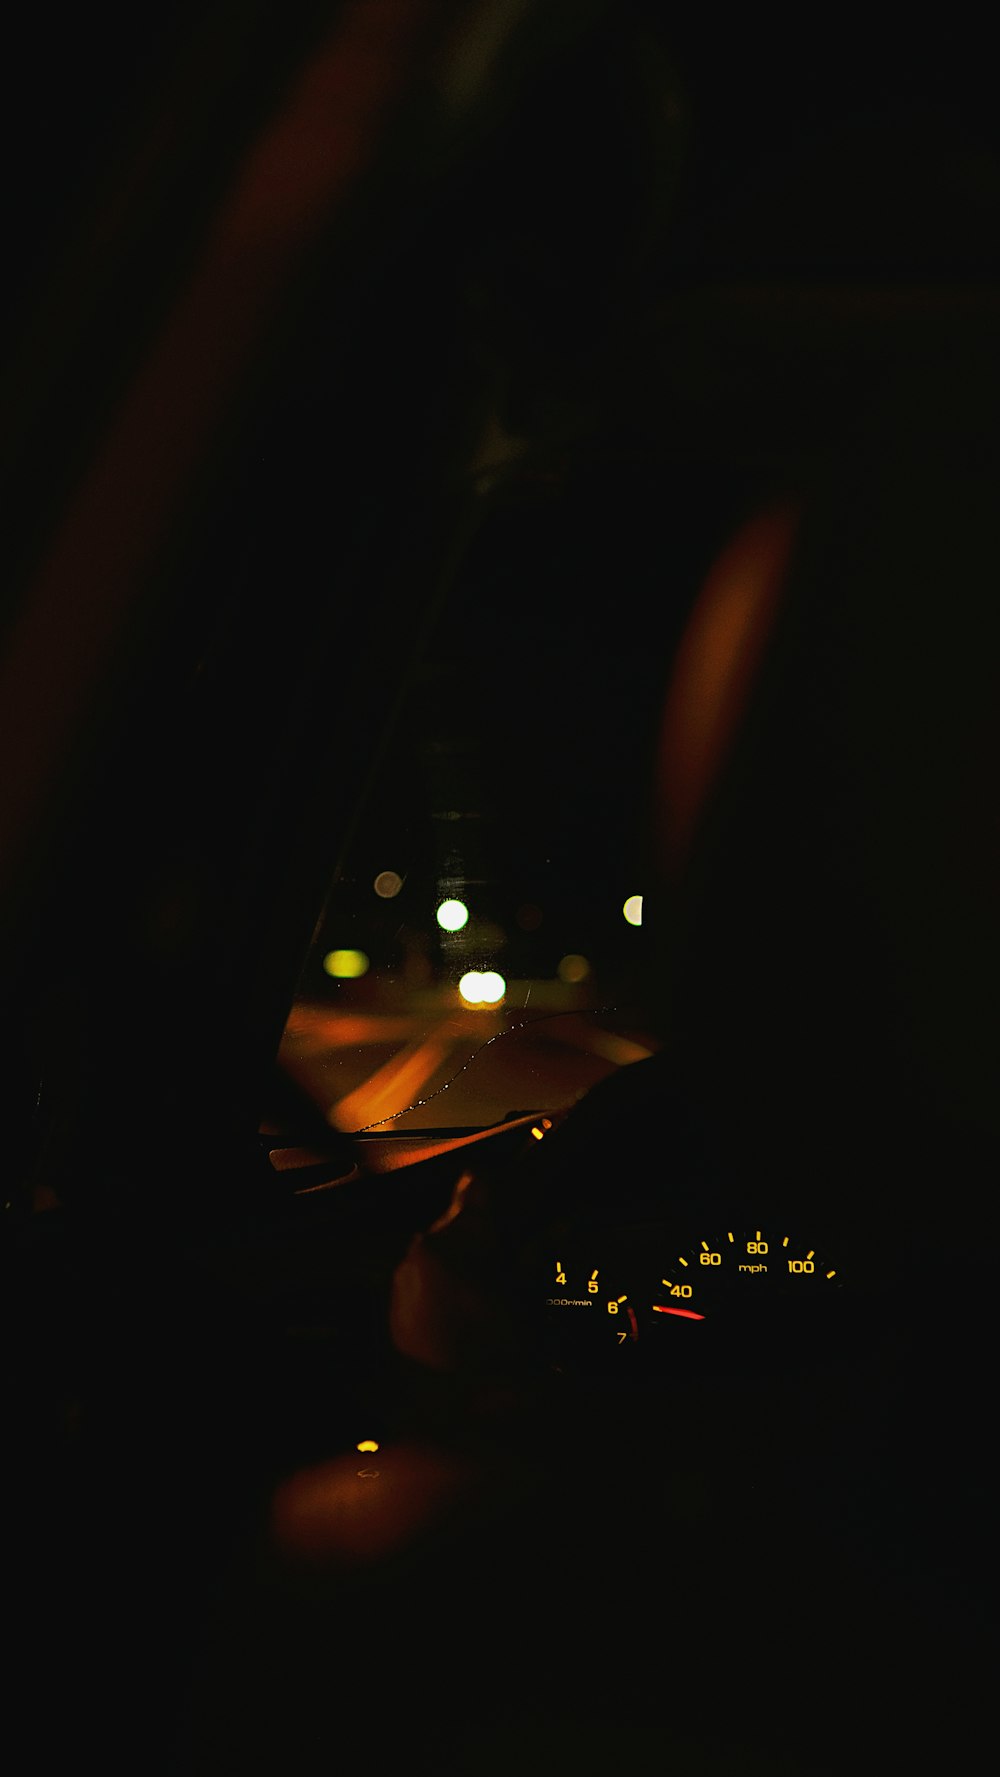 a blurry photo of a car dashboard at night